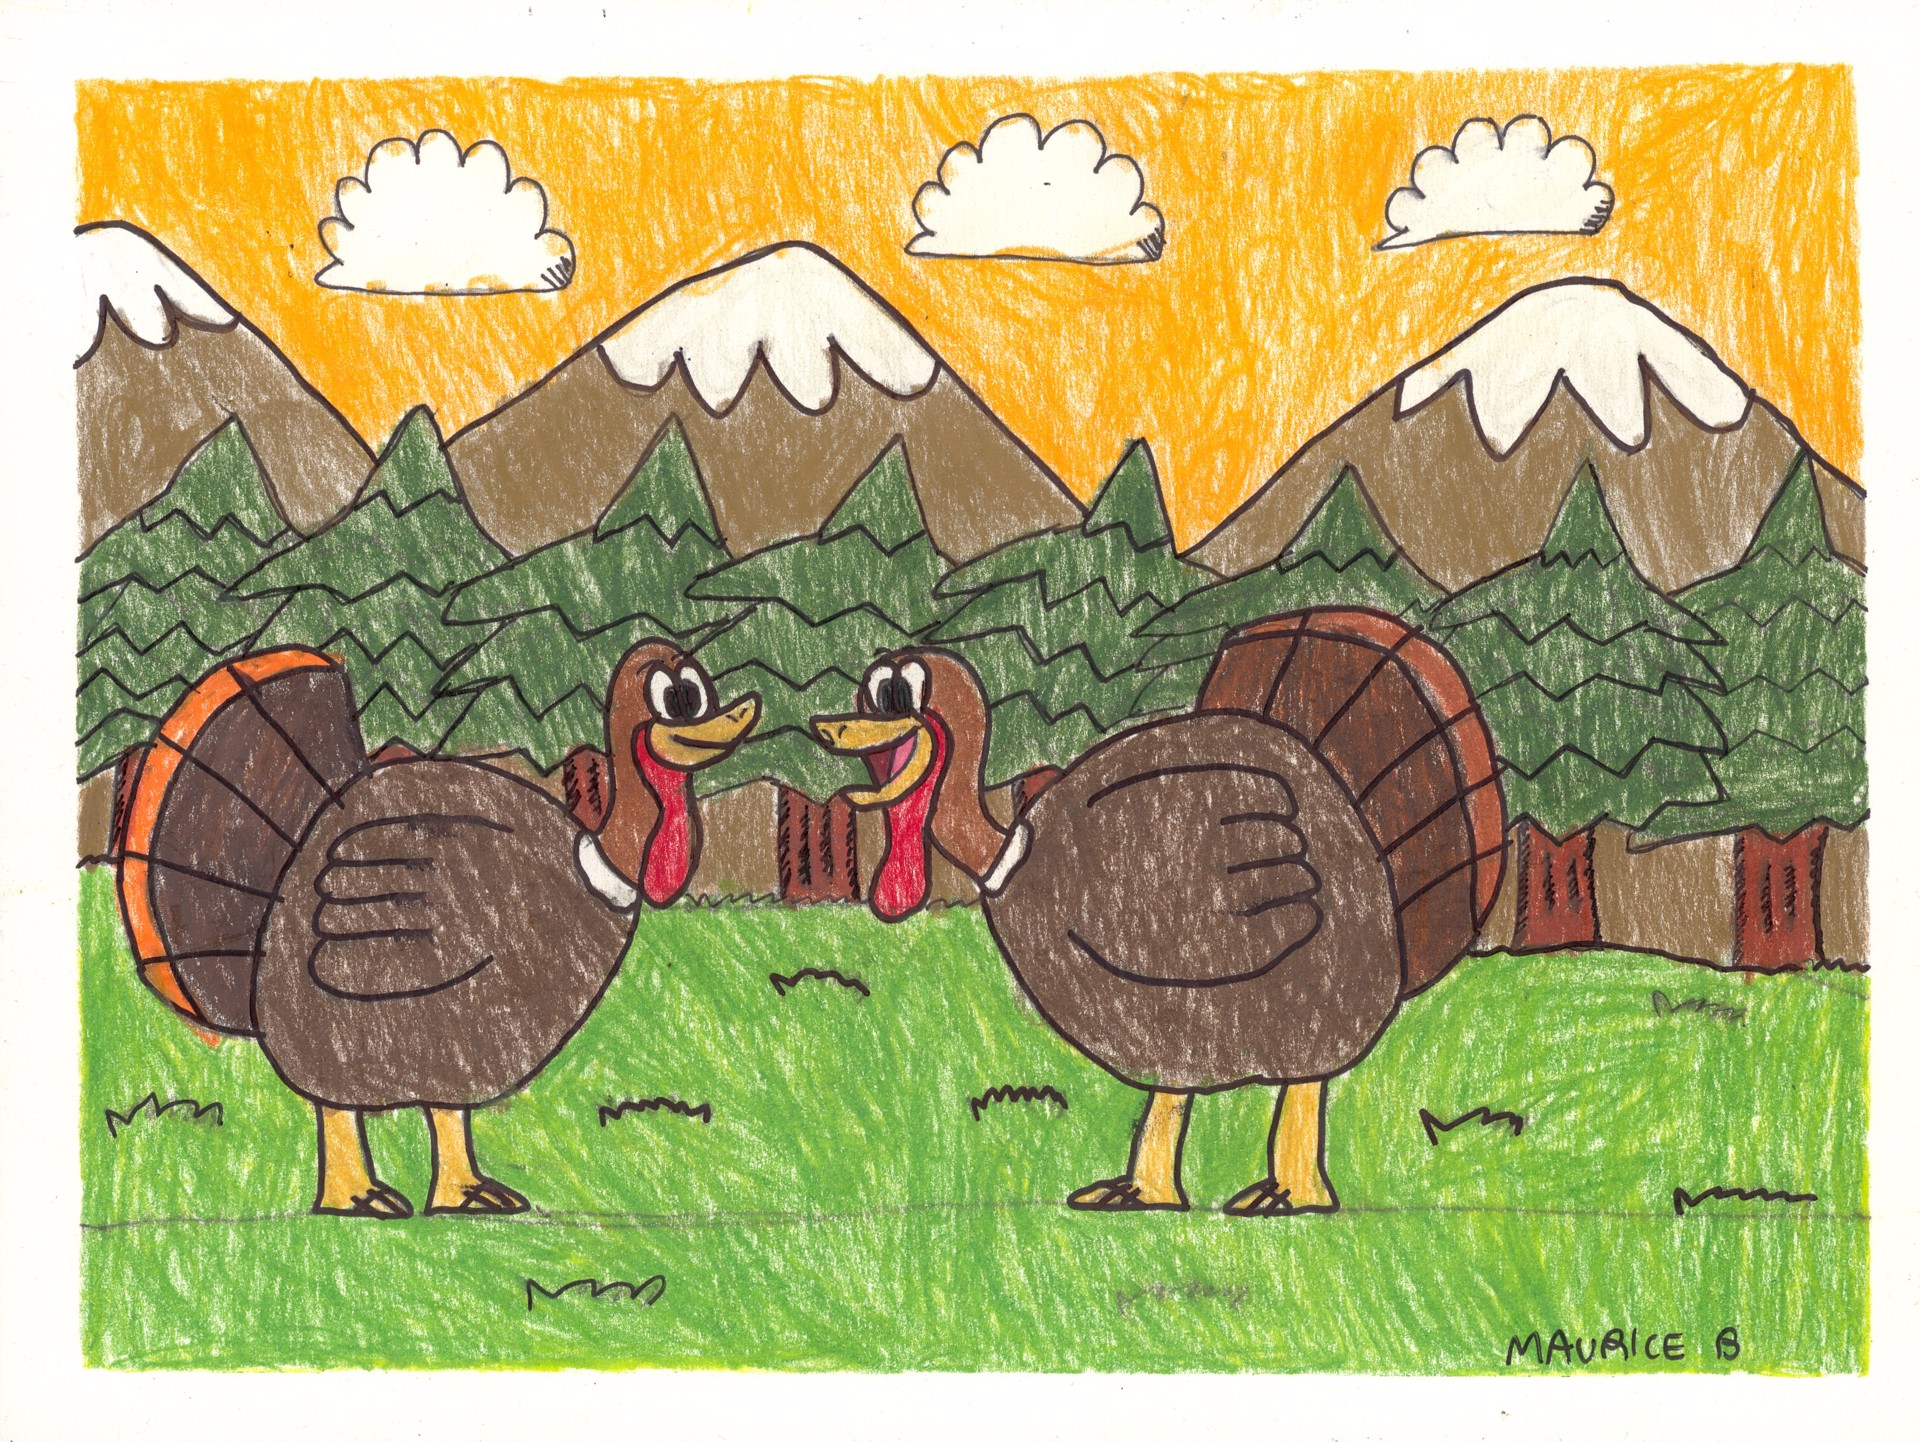 Turkey Woods by Maurice Barnes